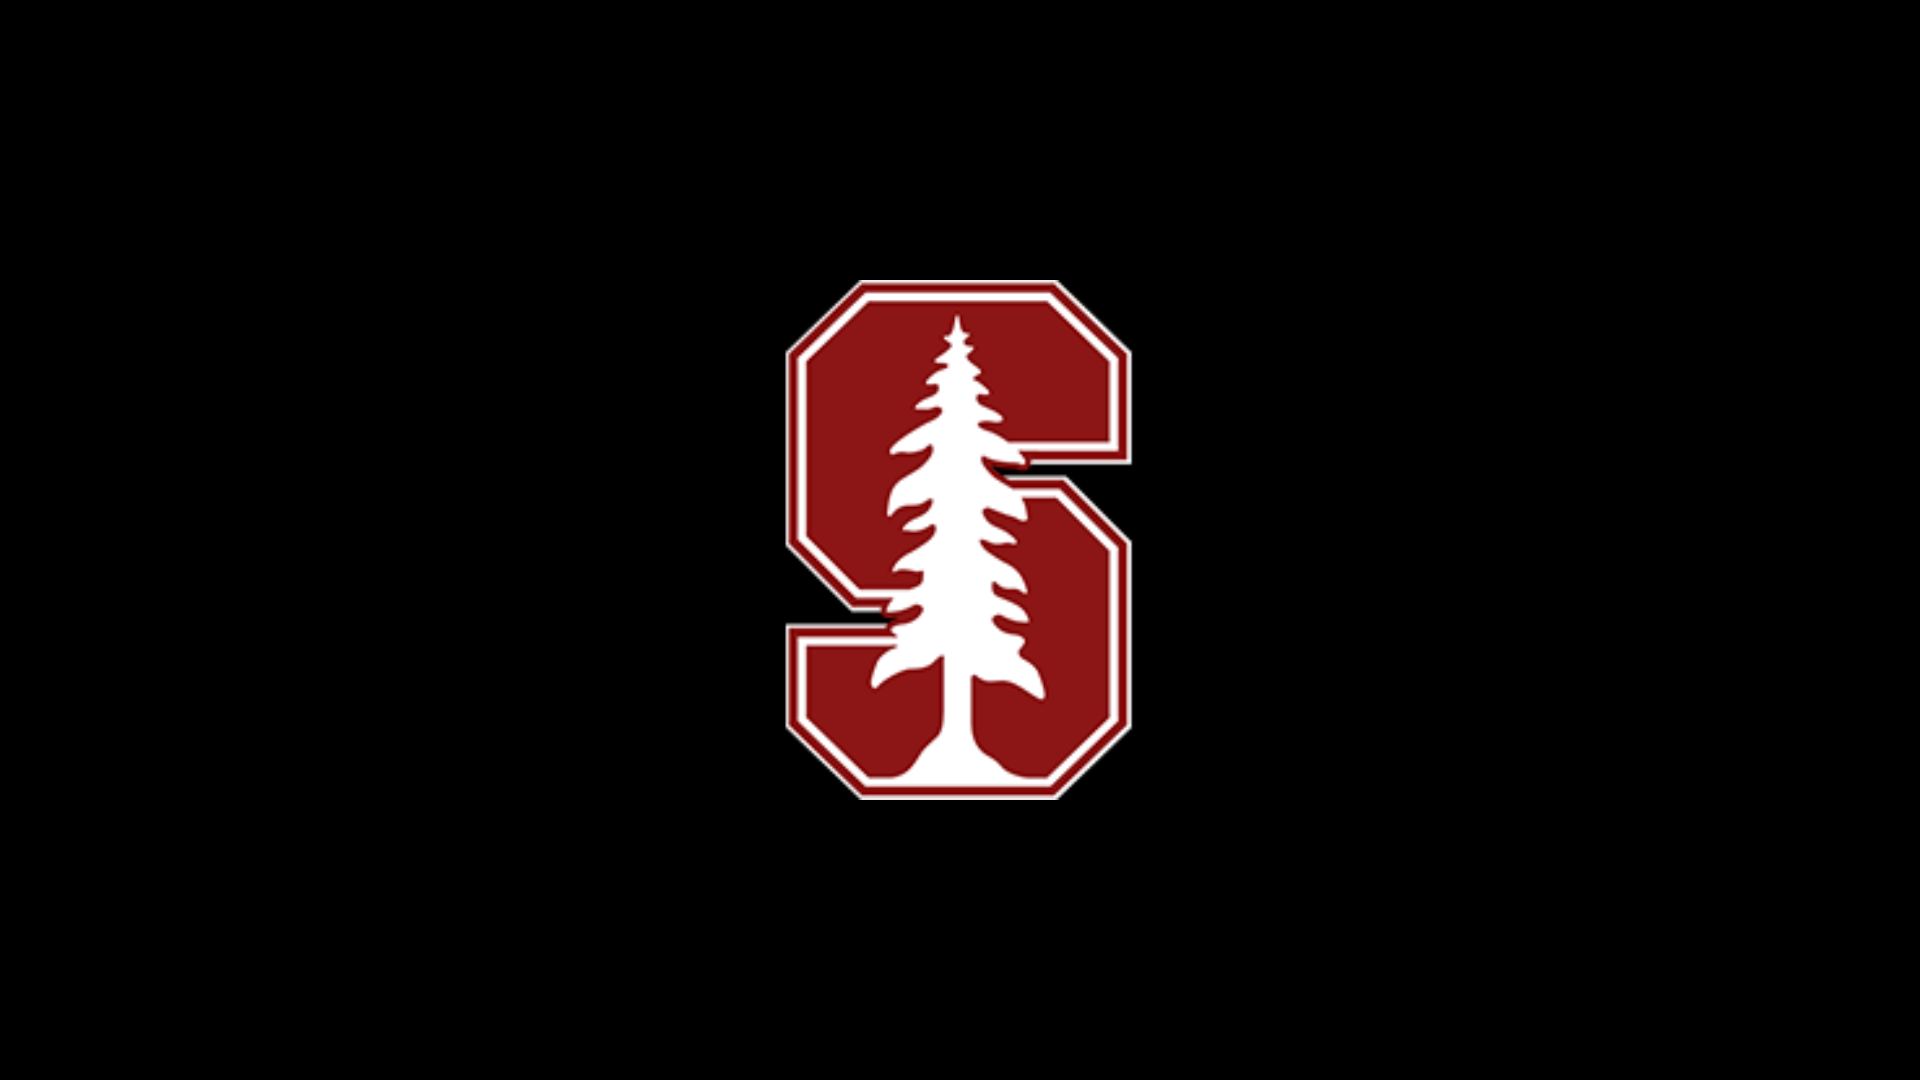 Stanford adds Shaw as Associate Head Basketball Coach